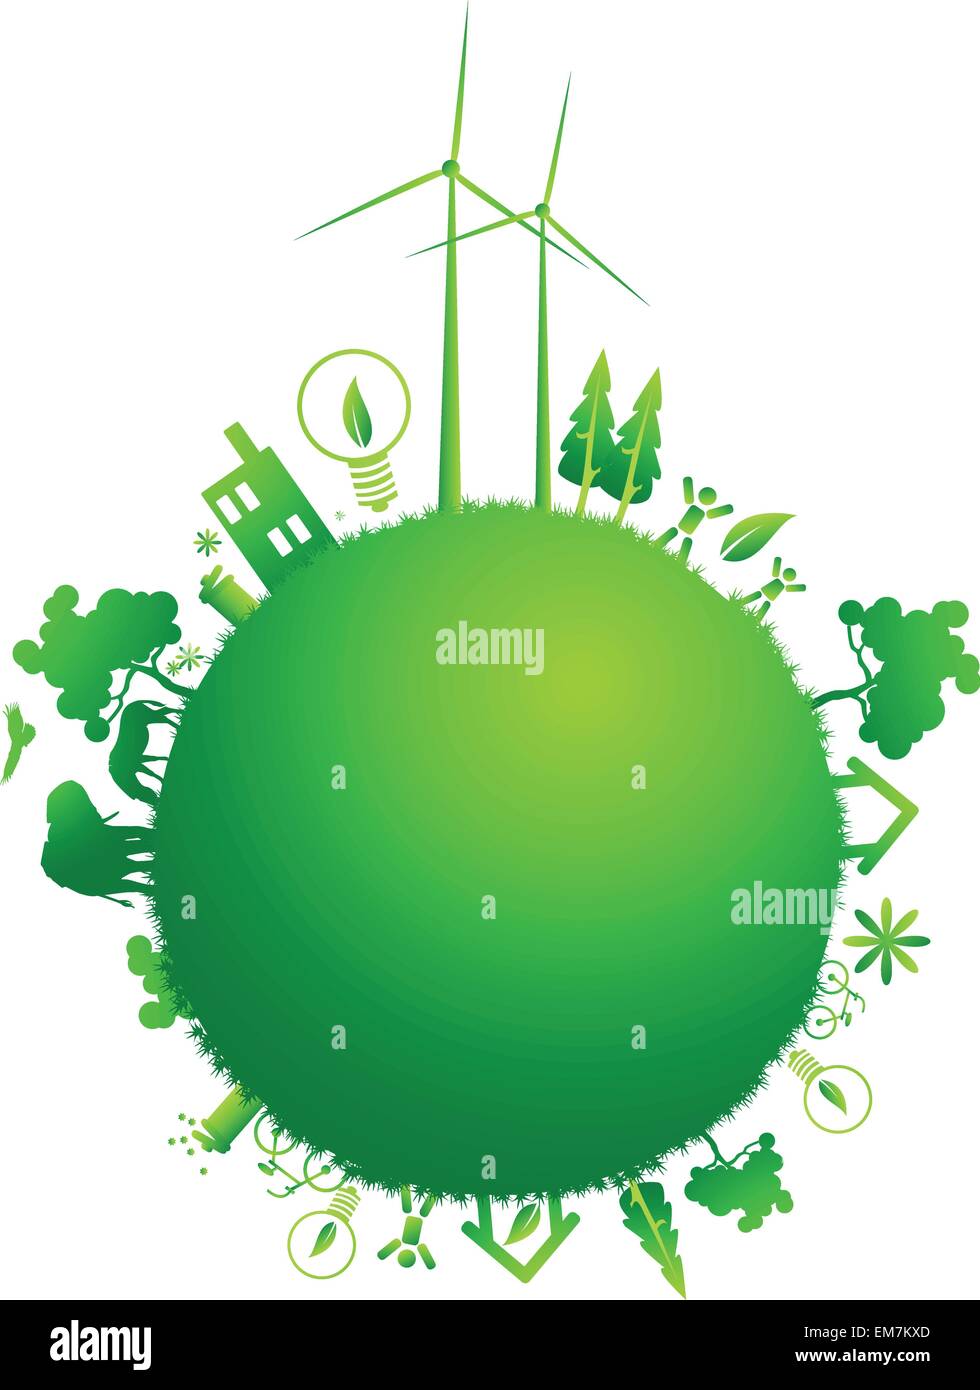 green earth illustration Stock Vector